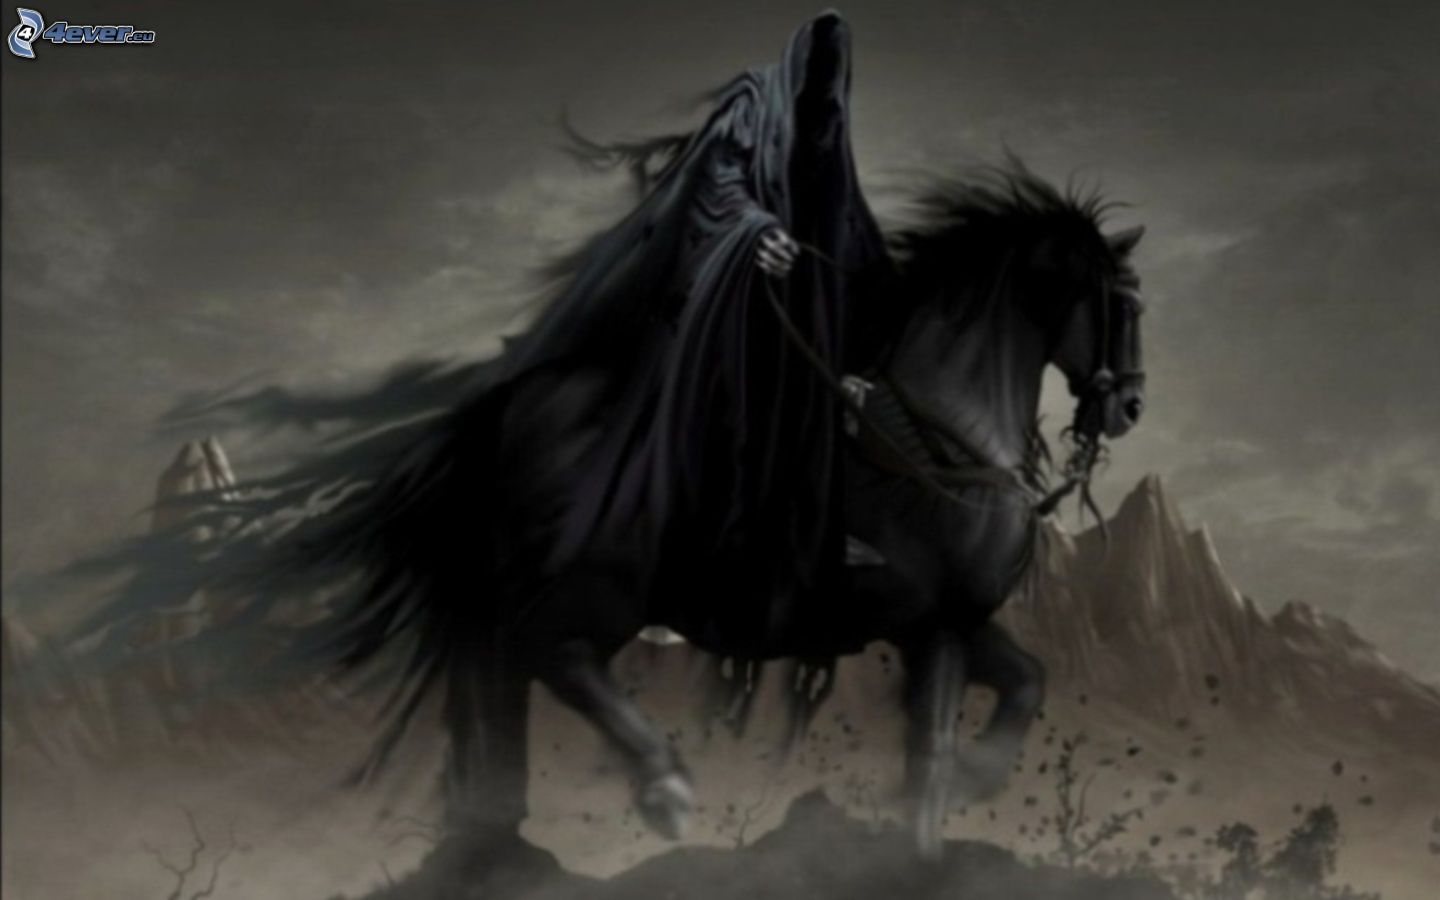 [pictures.4ever.eu] grim reaper, horse 156477.jpg